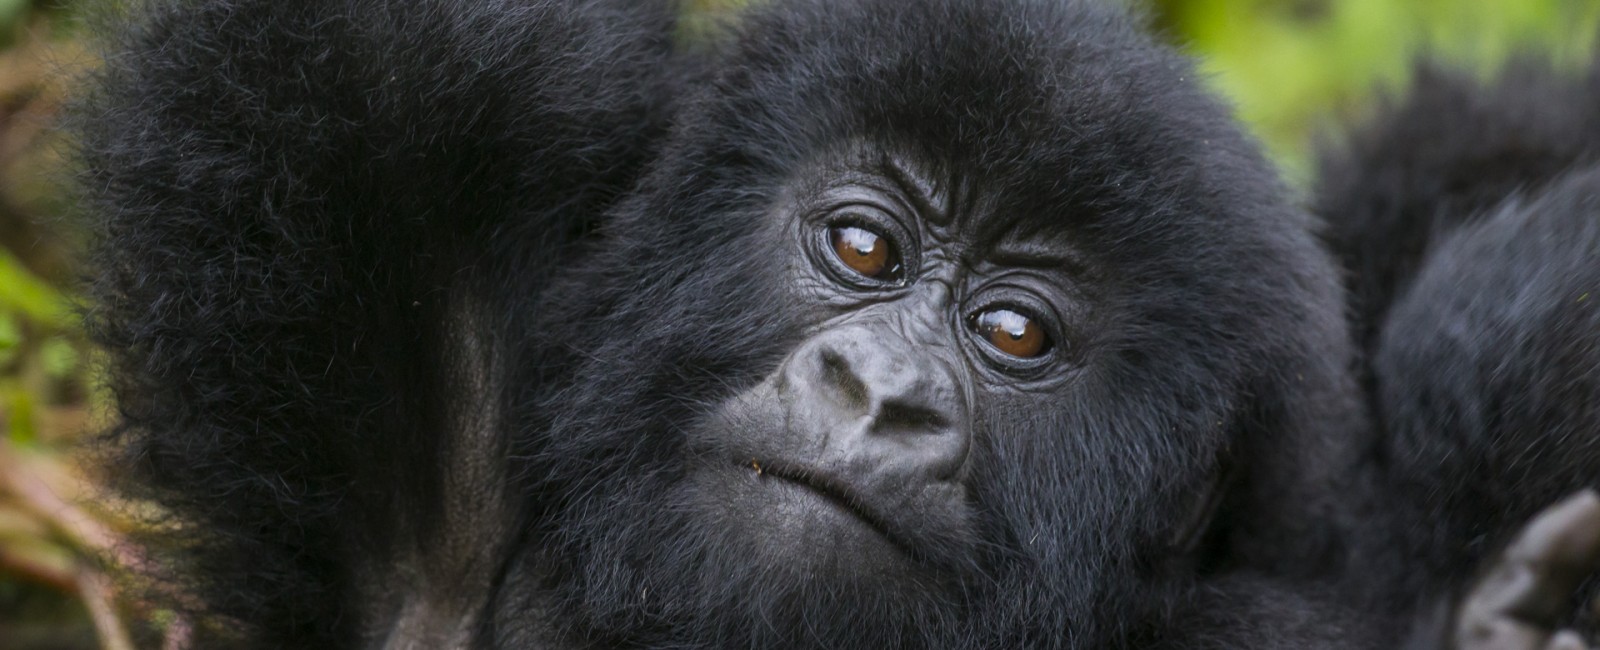 Permalink to The Gorilla Safari: Day 3